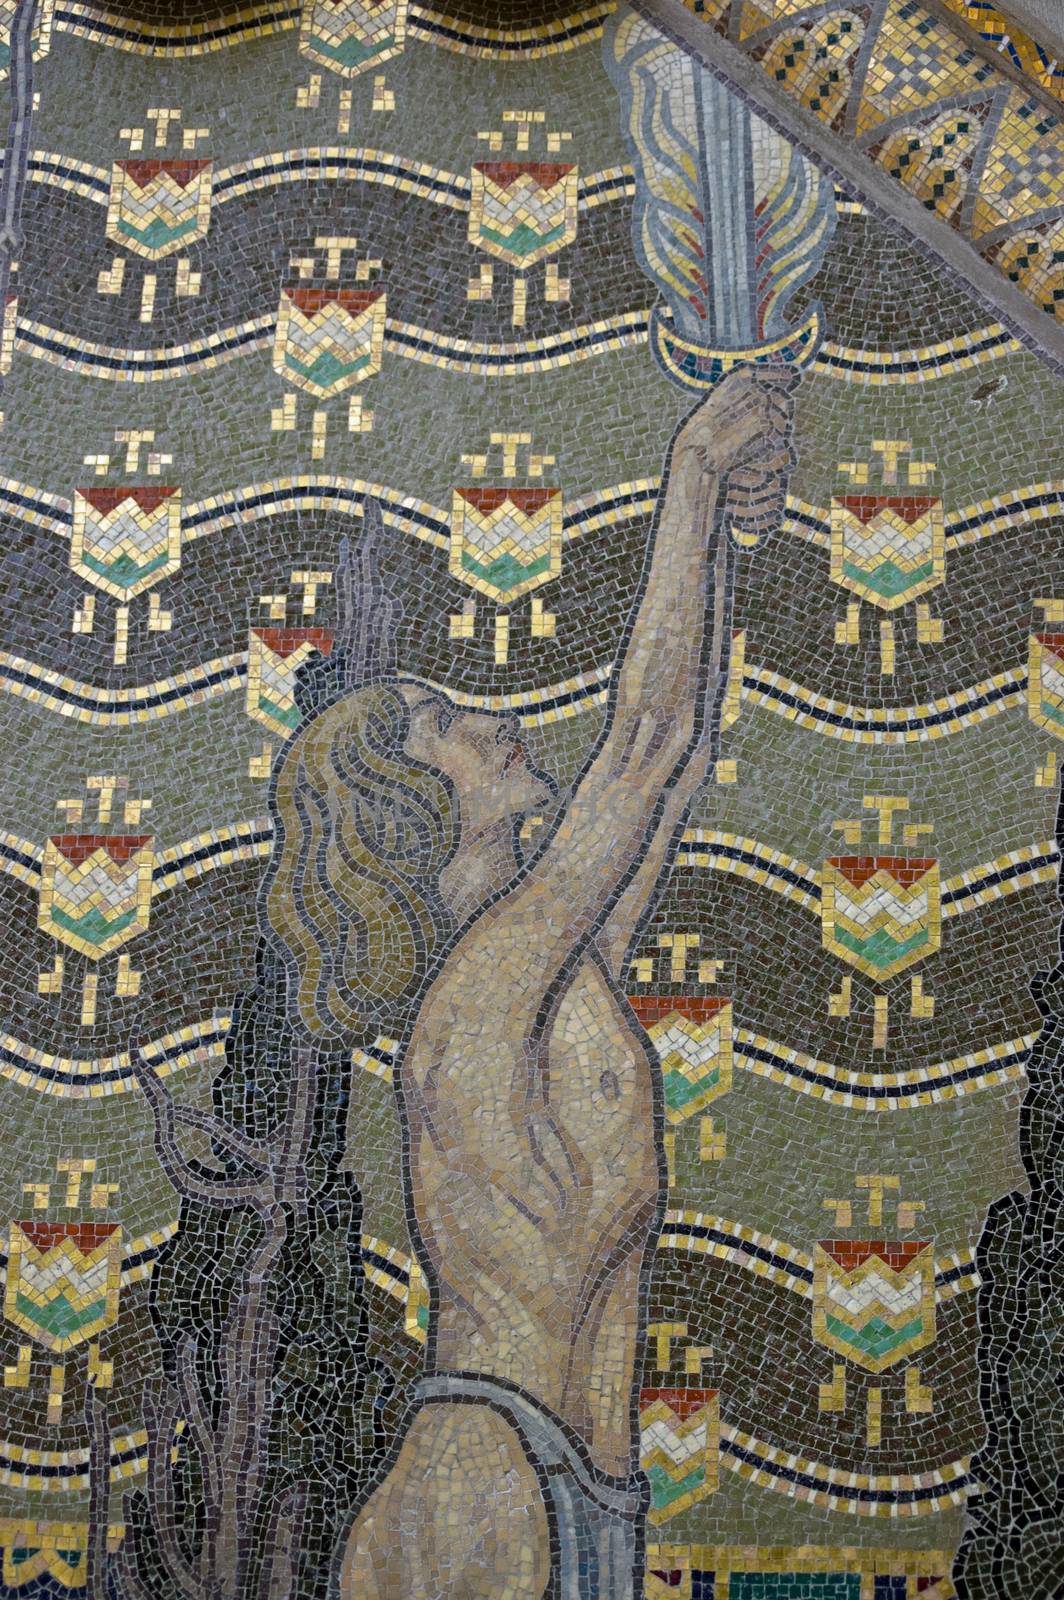 Sword of God mosaic, Hungarian Pavilion by BasPhoto